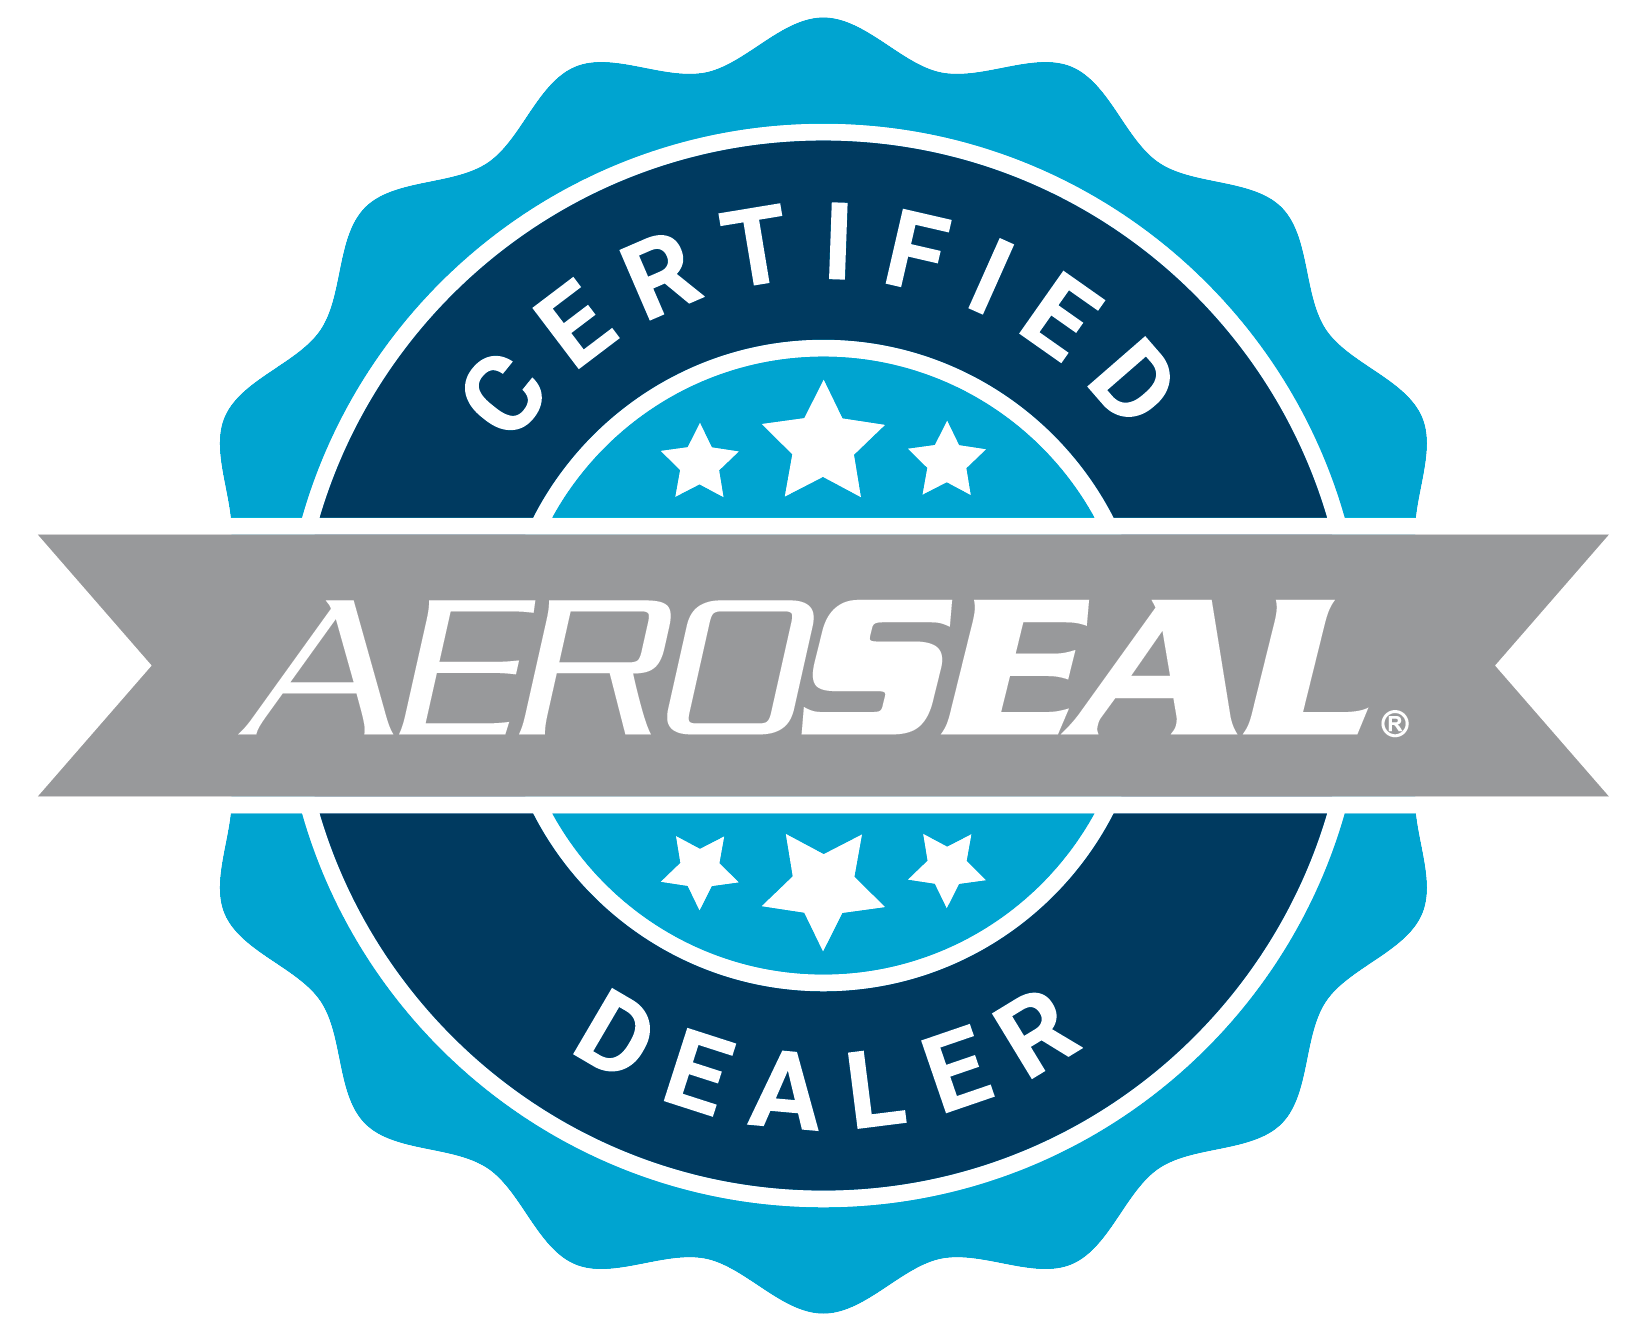 Certified Aeroseal Dealer pin